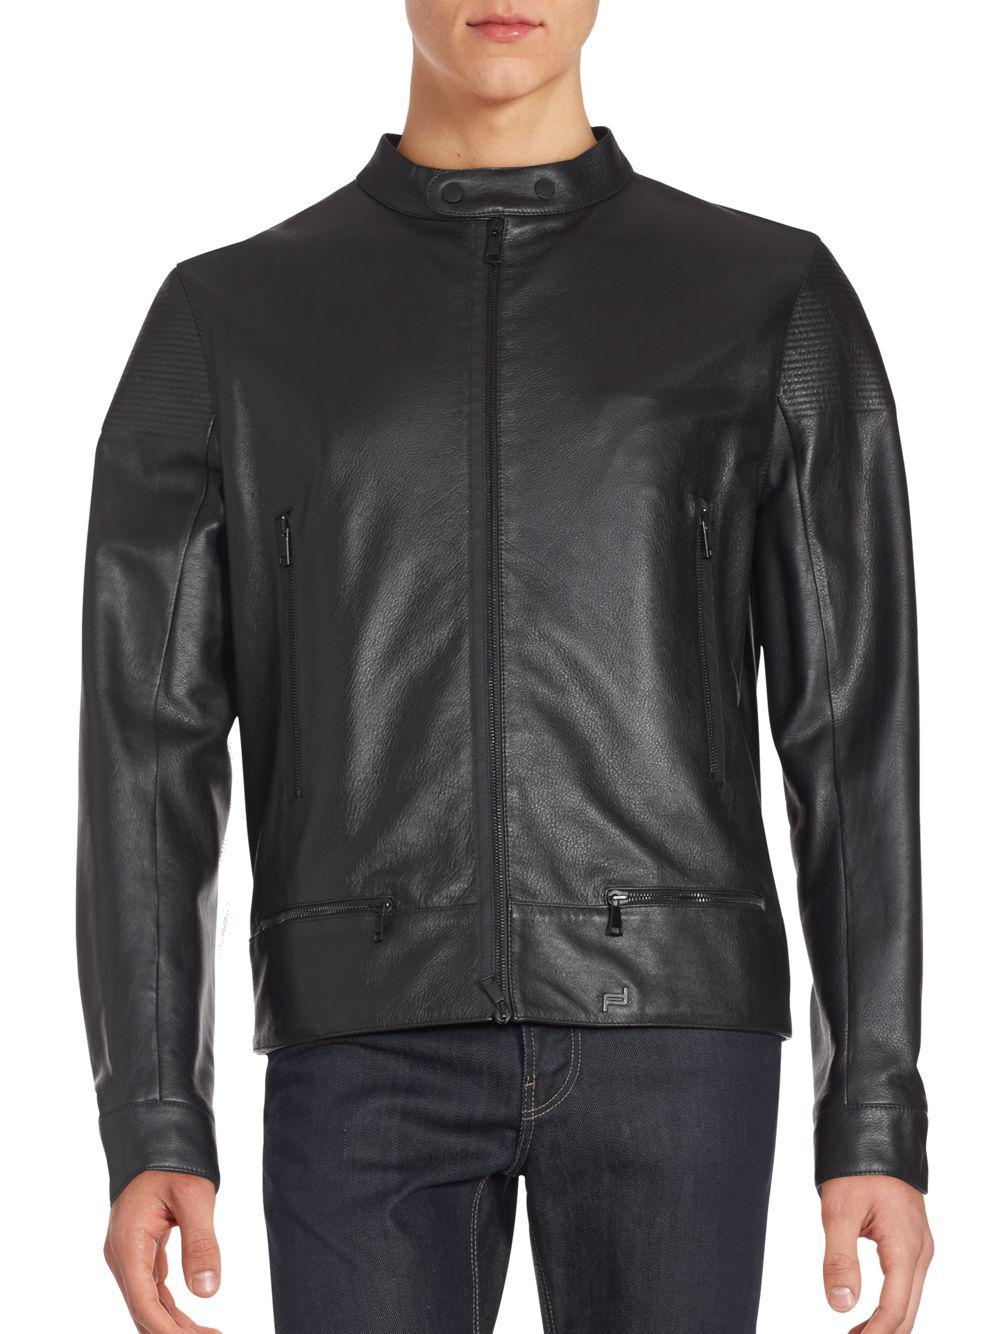 Porsche Design Motocross Leather Jacket in Black for Men - Lyst